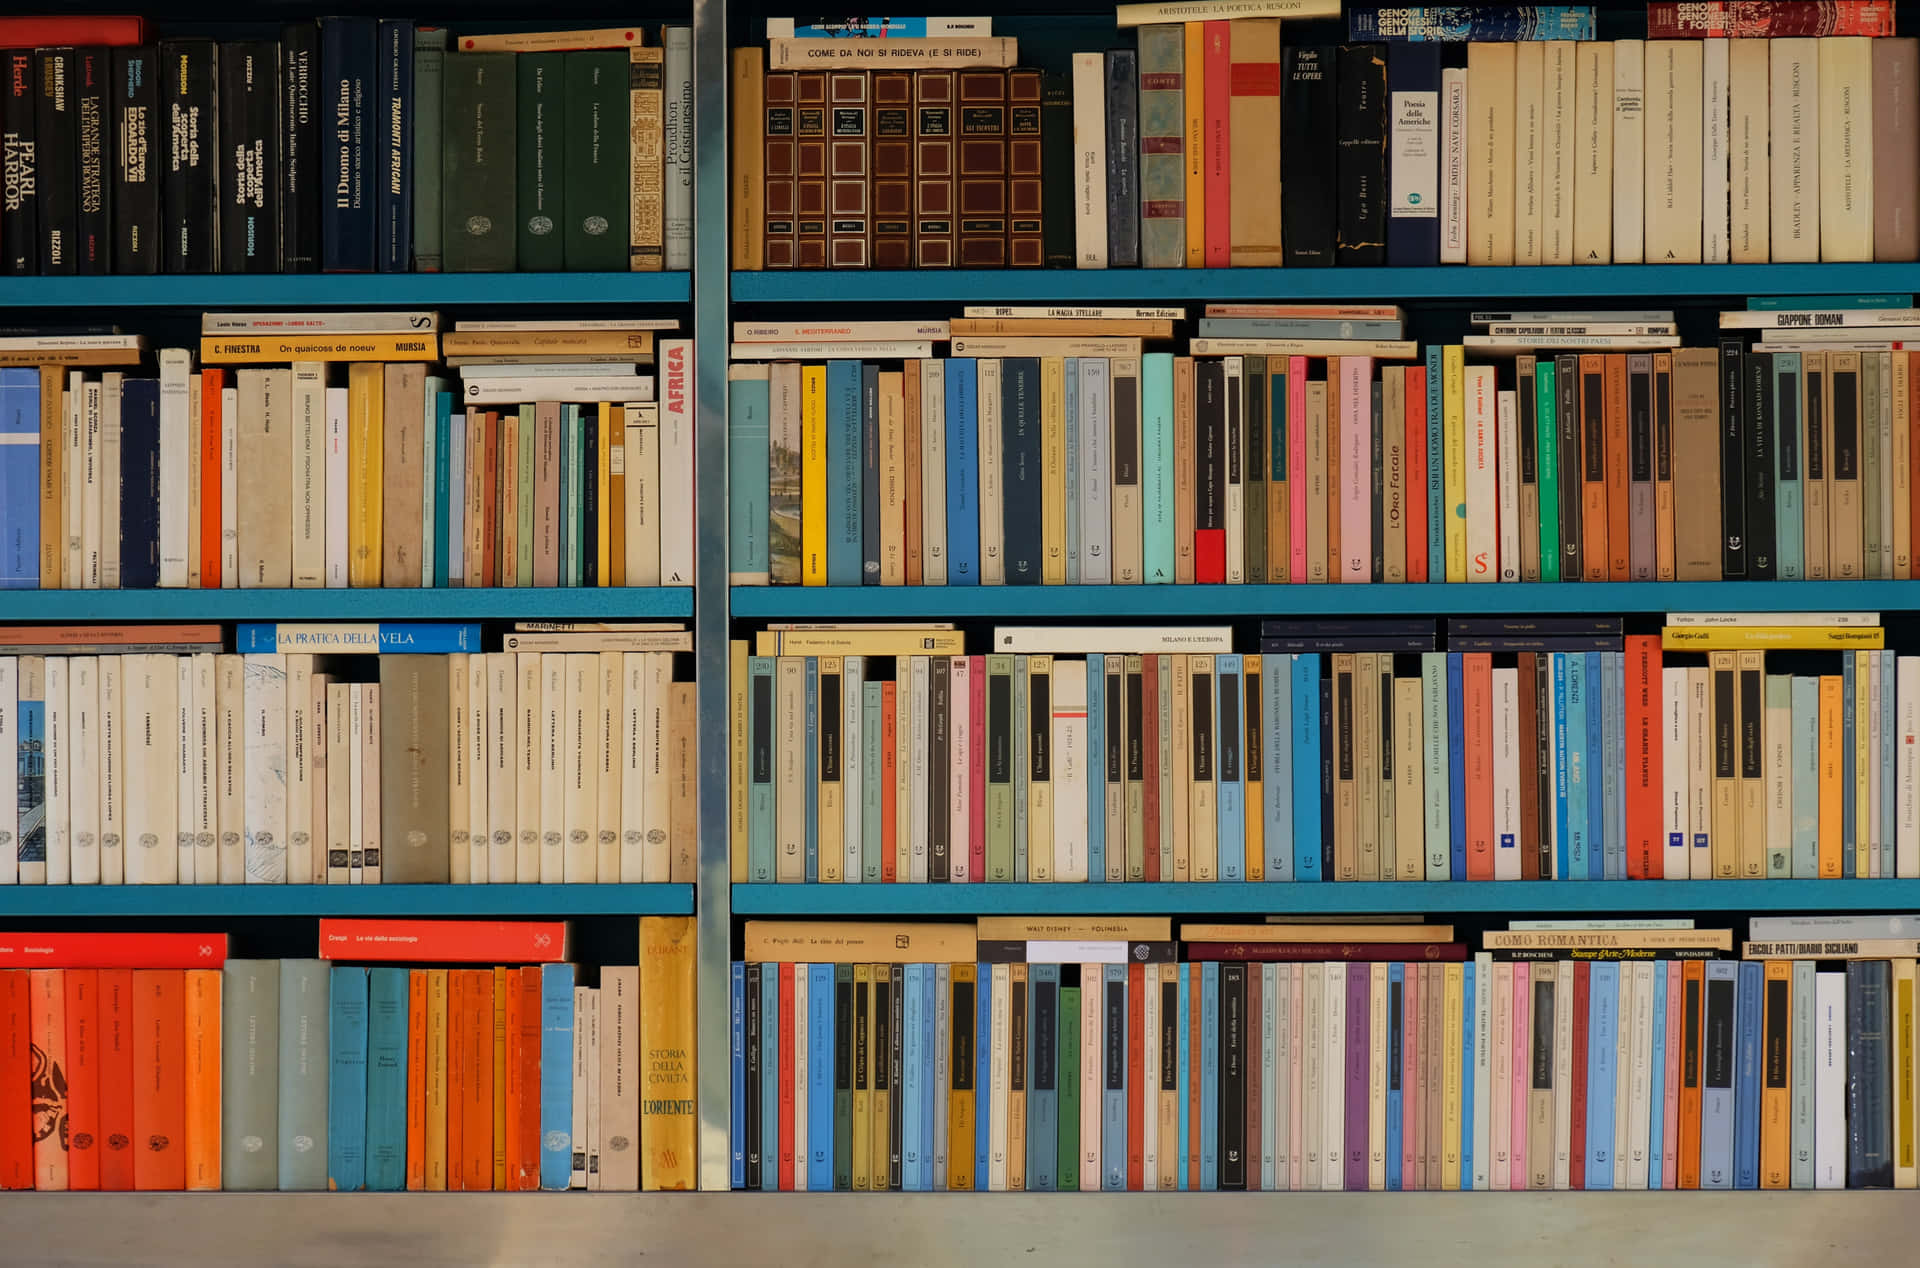 A Blue Shelf With Many Books On It